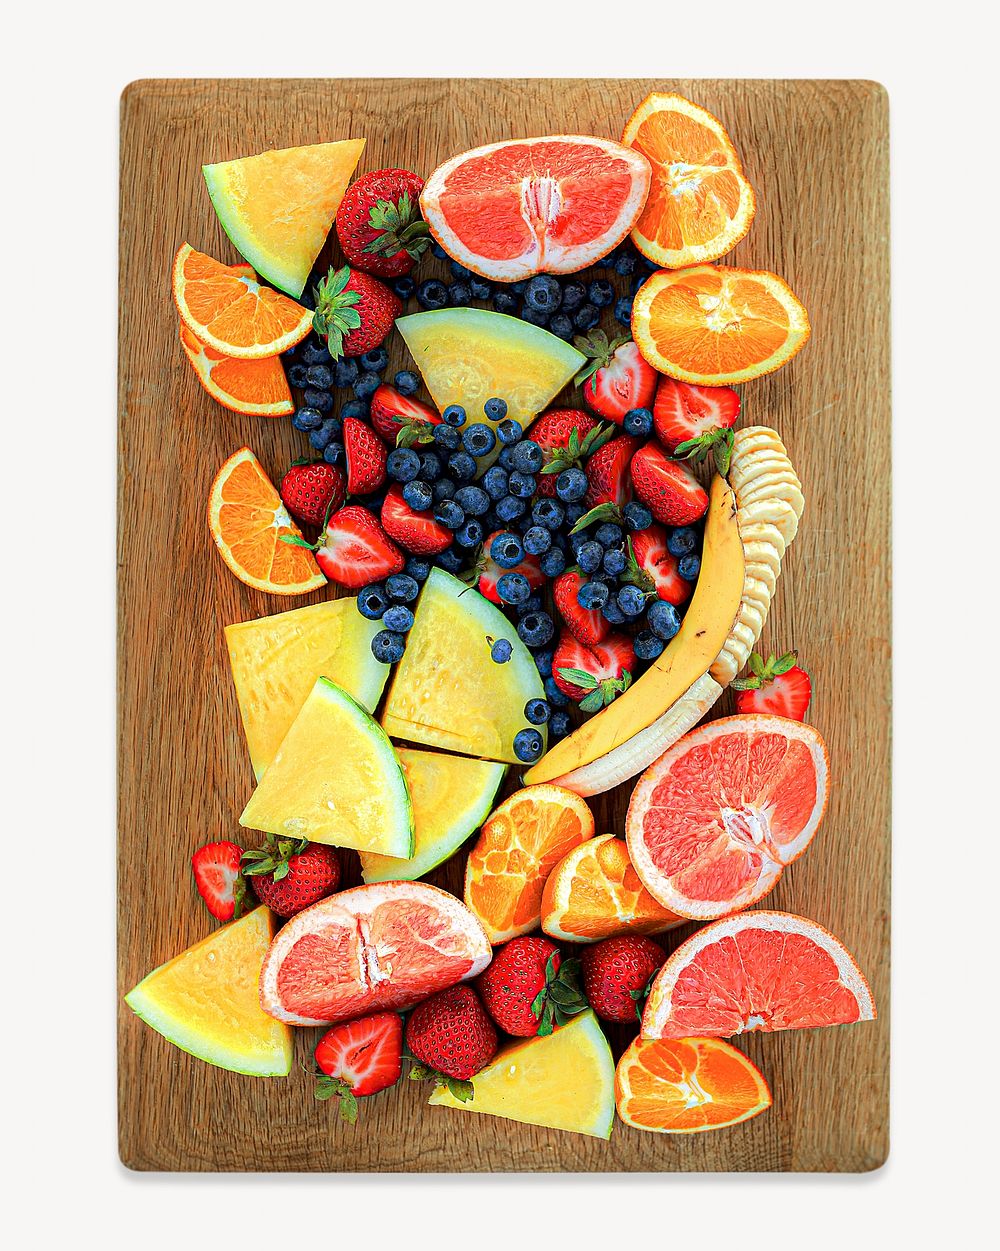 Fruit board, fresh food for picnic